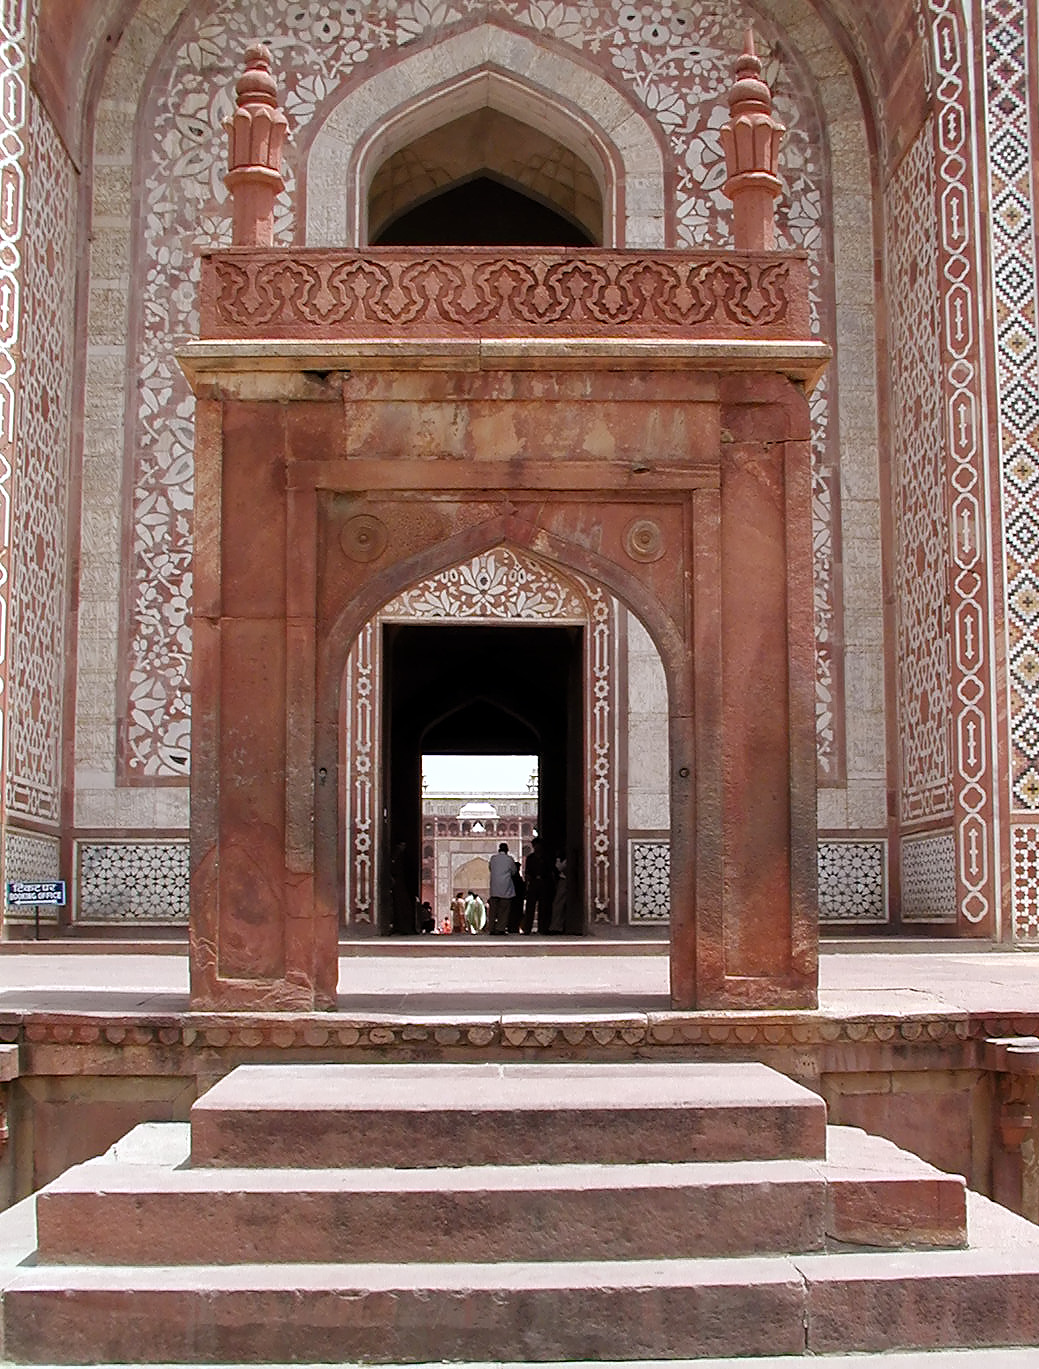 10-Jun-2001 11:02 - On the road to Agra - Sikandra - Tomb of Akbar